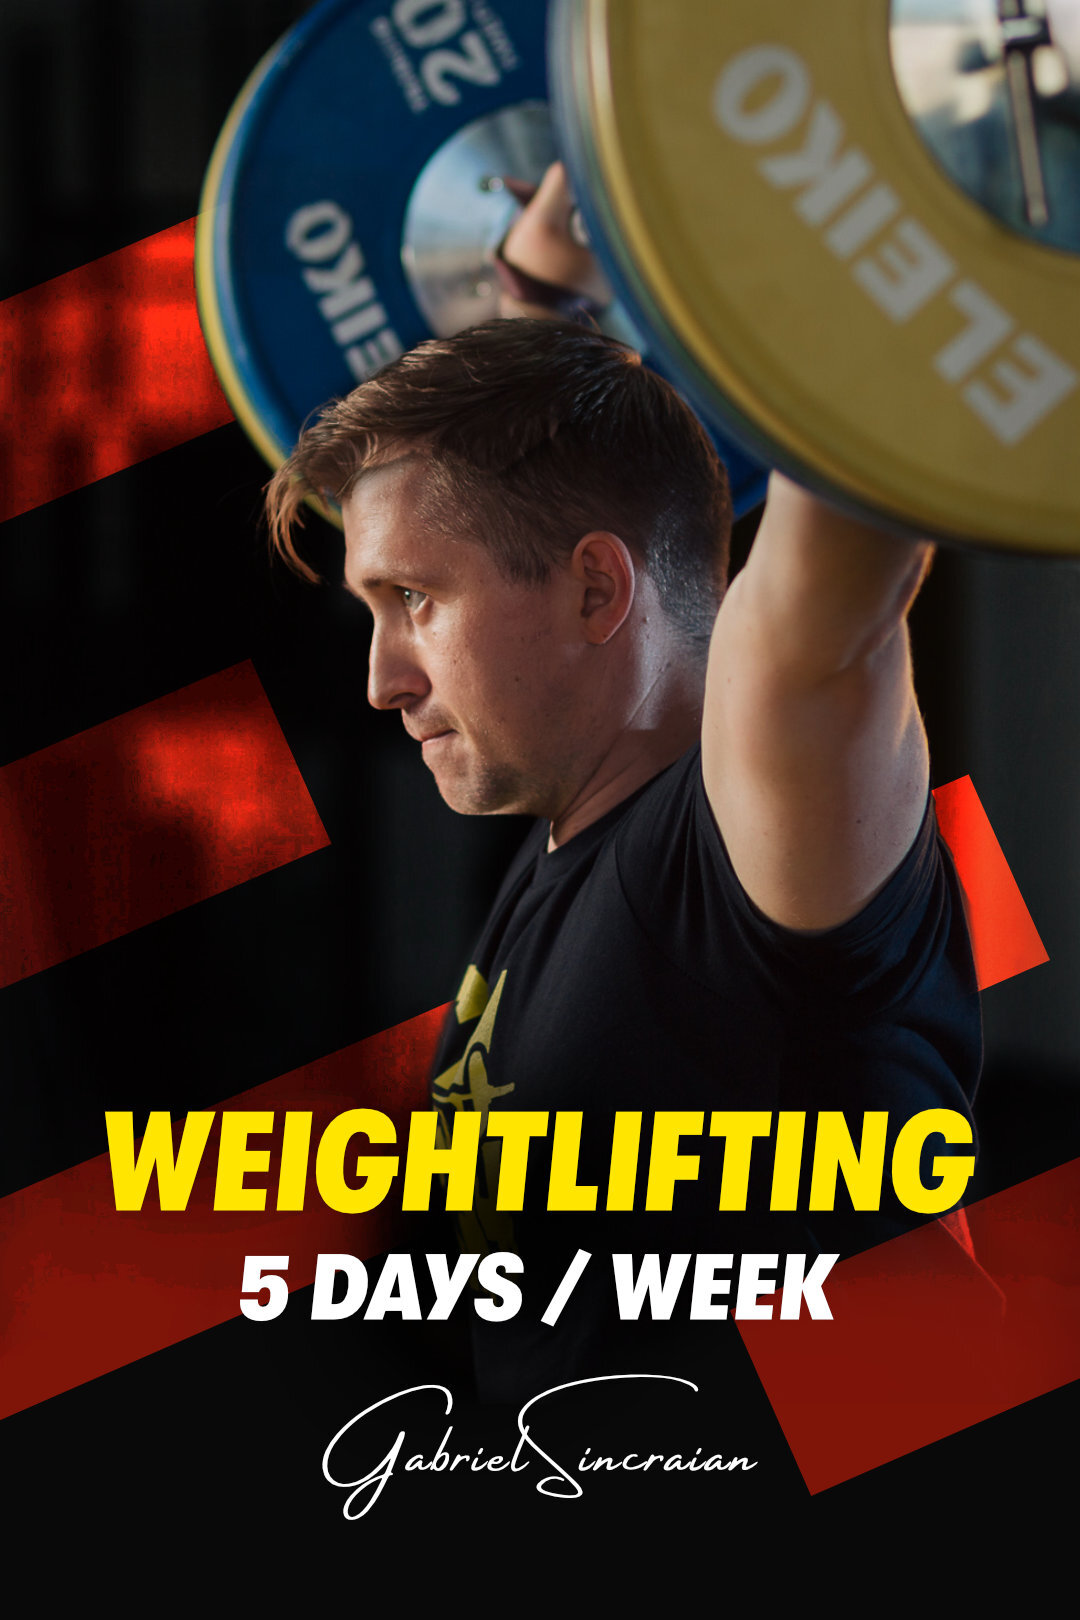 5 Days / Week Weightlifting